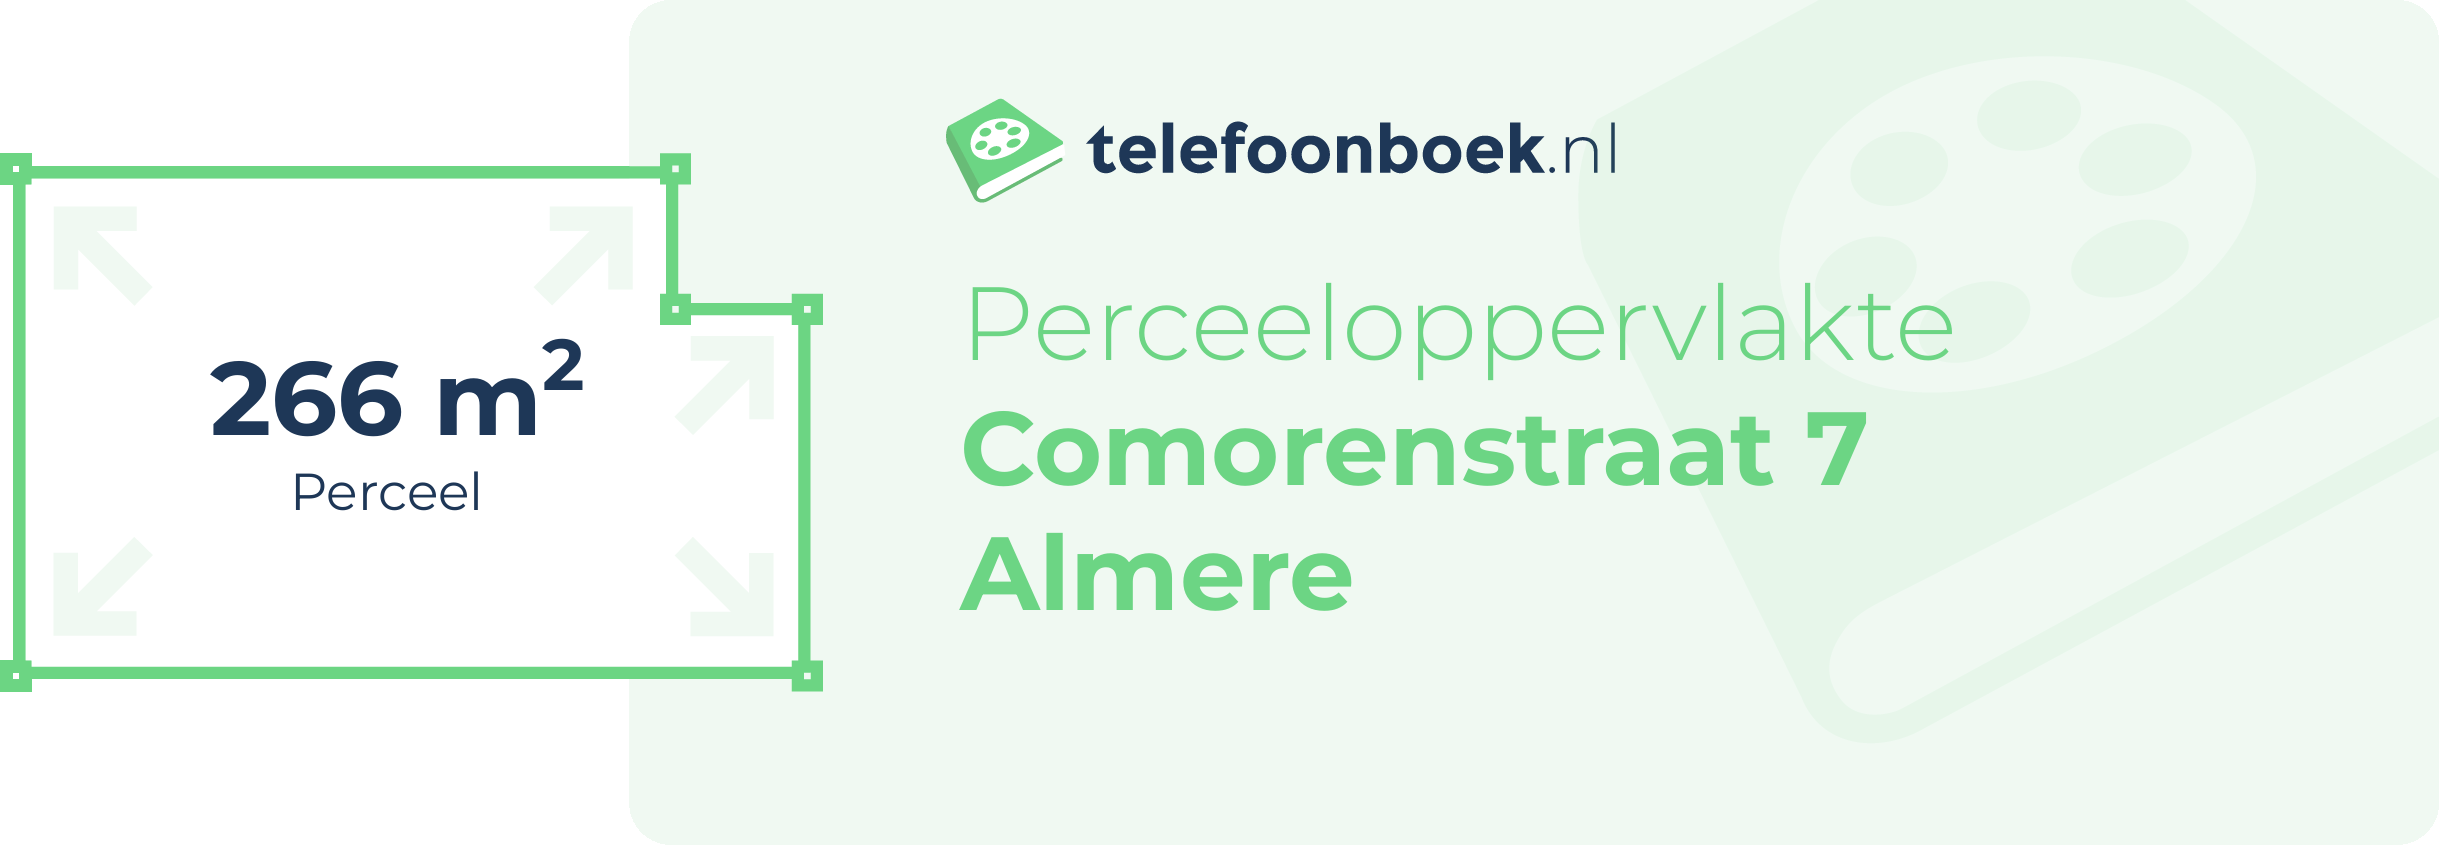 Perceeloppervlakte Comorenstraat 7 Almere